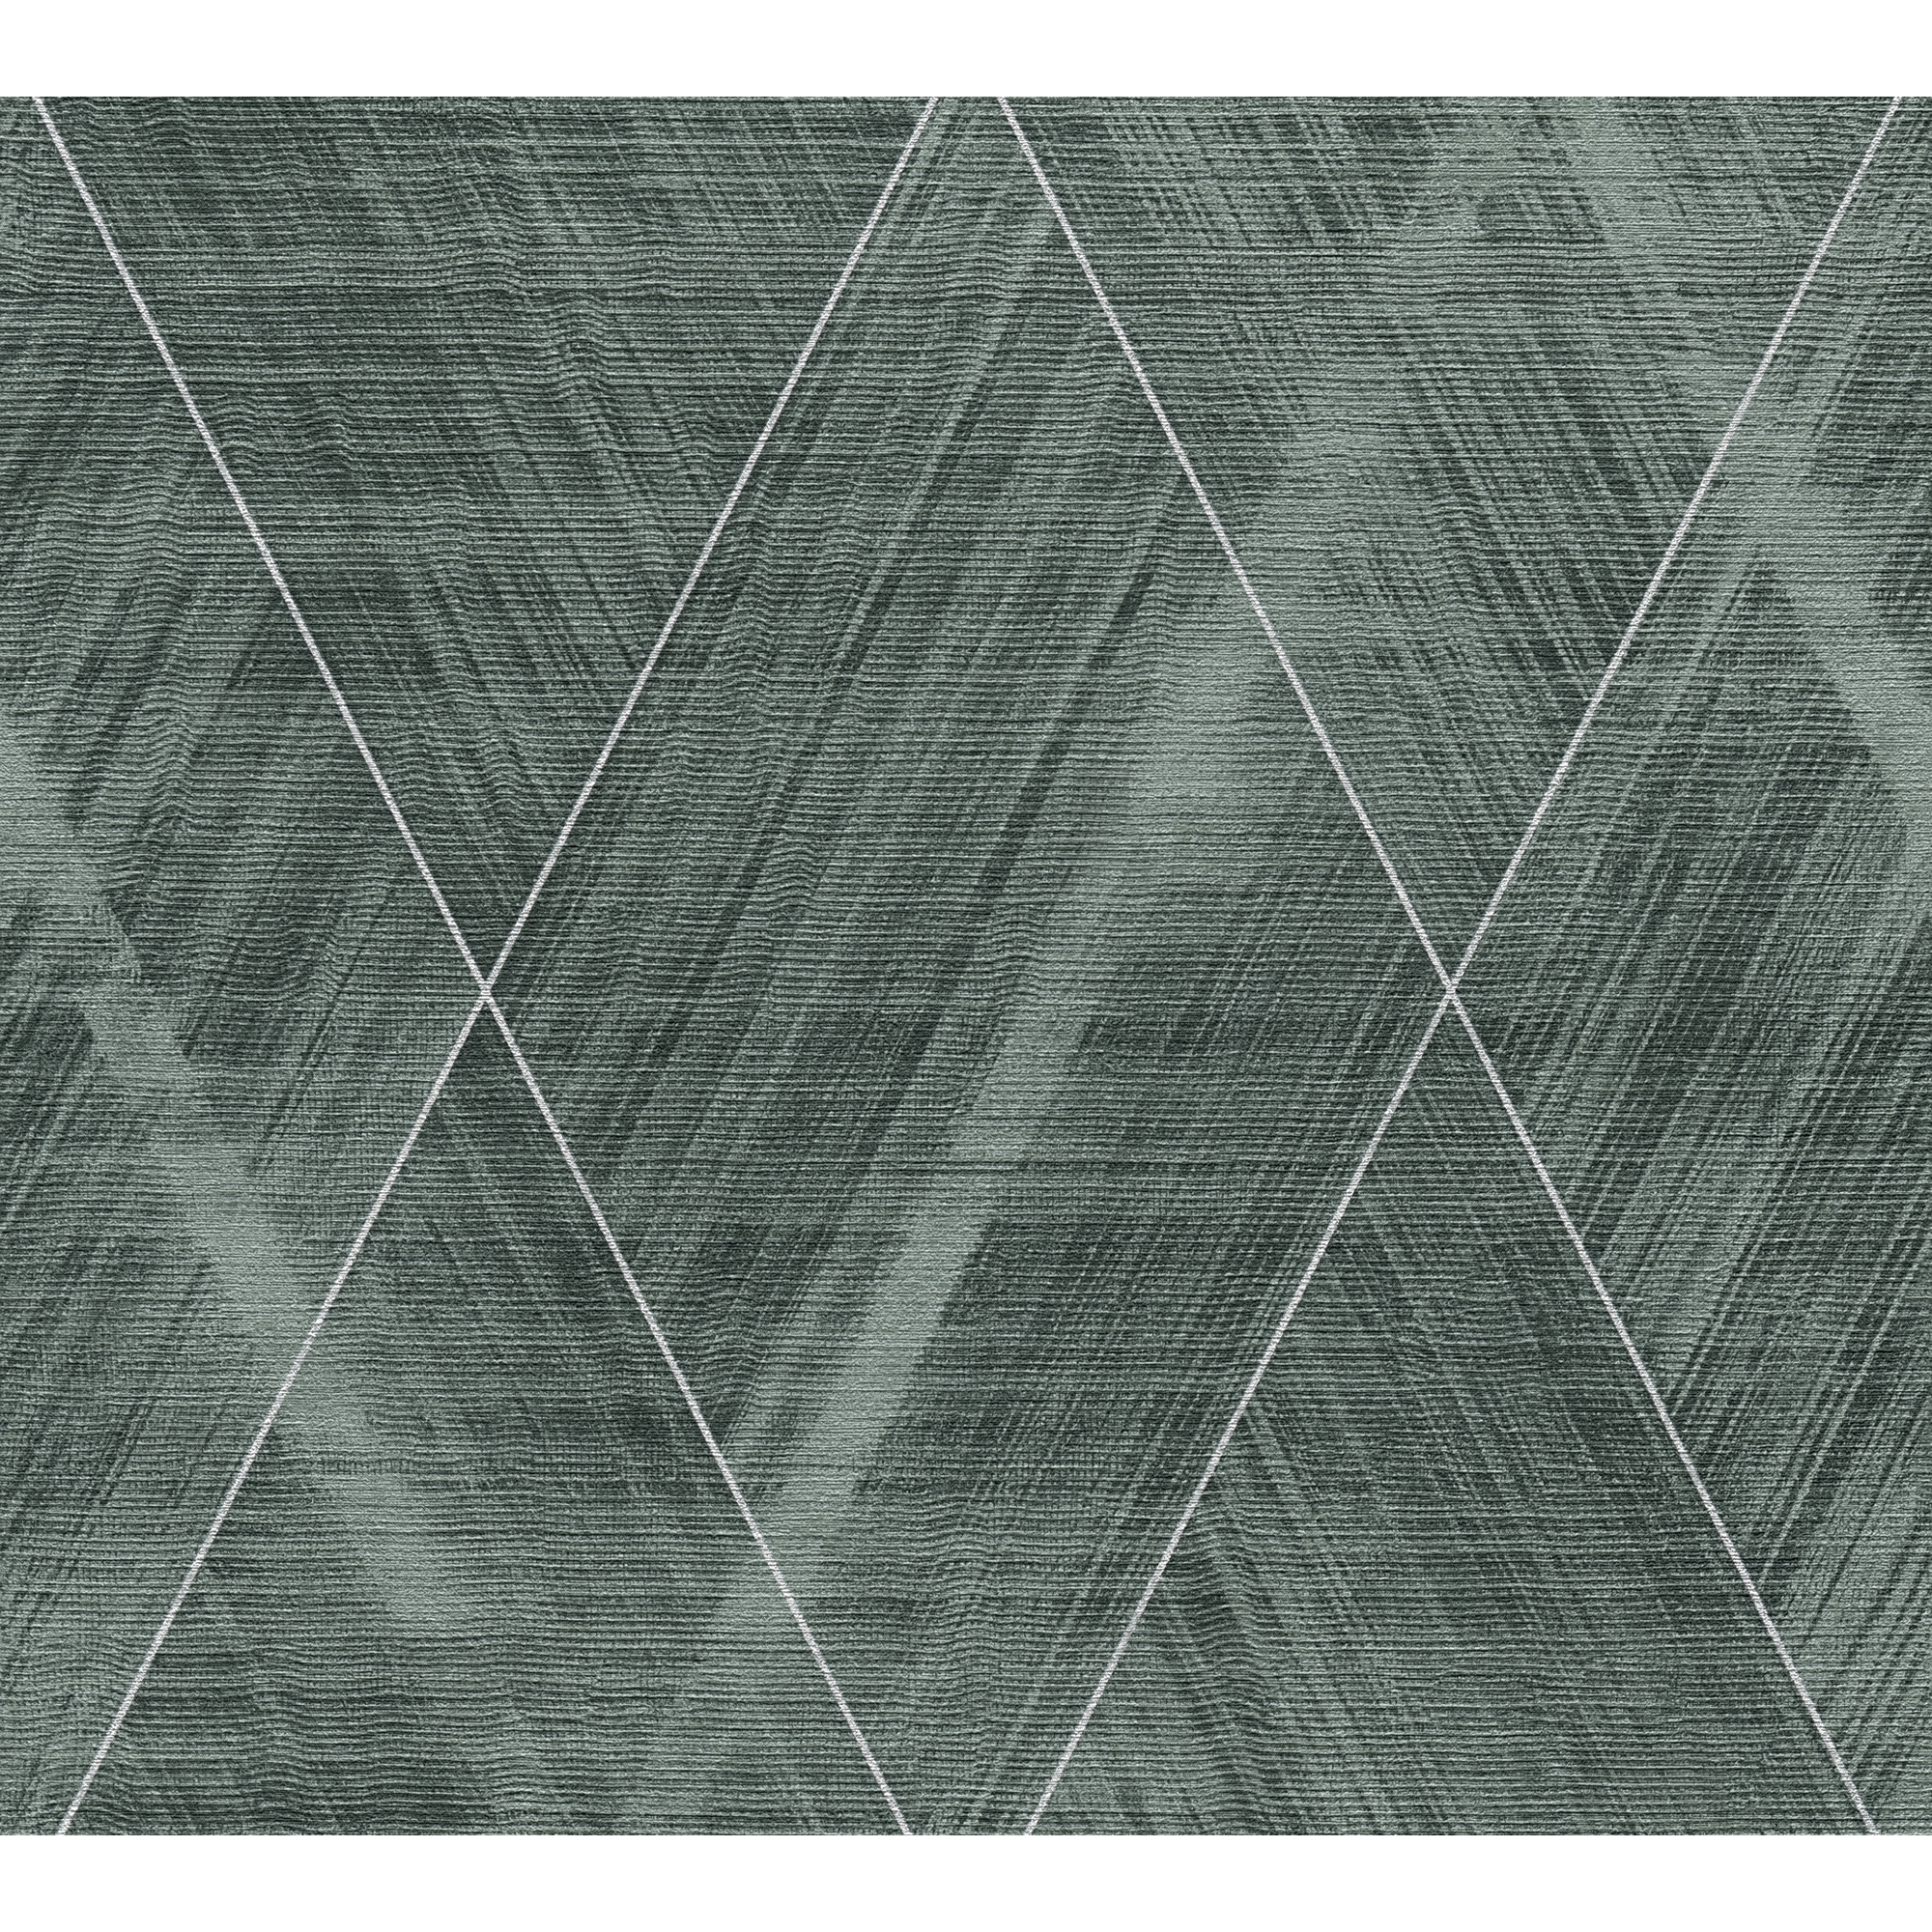 Vliestapete 'The BoS' Rautenmuster grün/schwarz 10,05 x 0,53 m + product picture